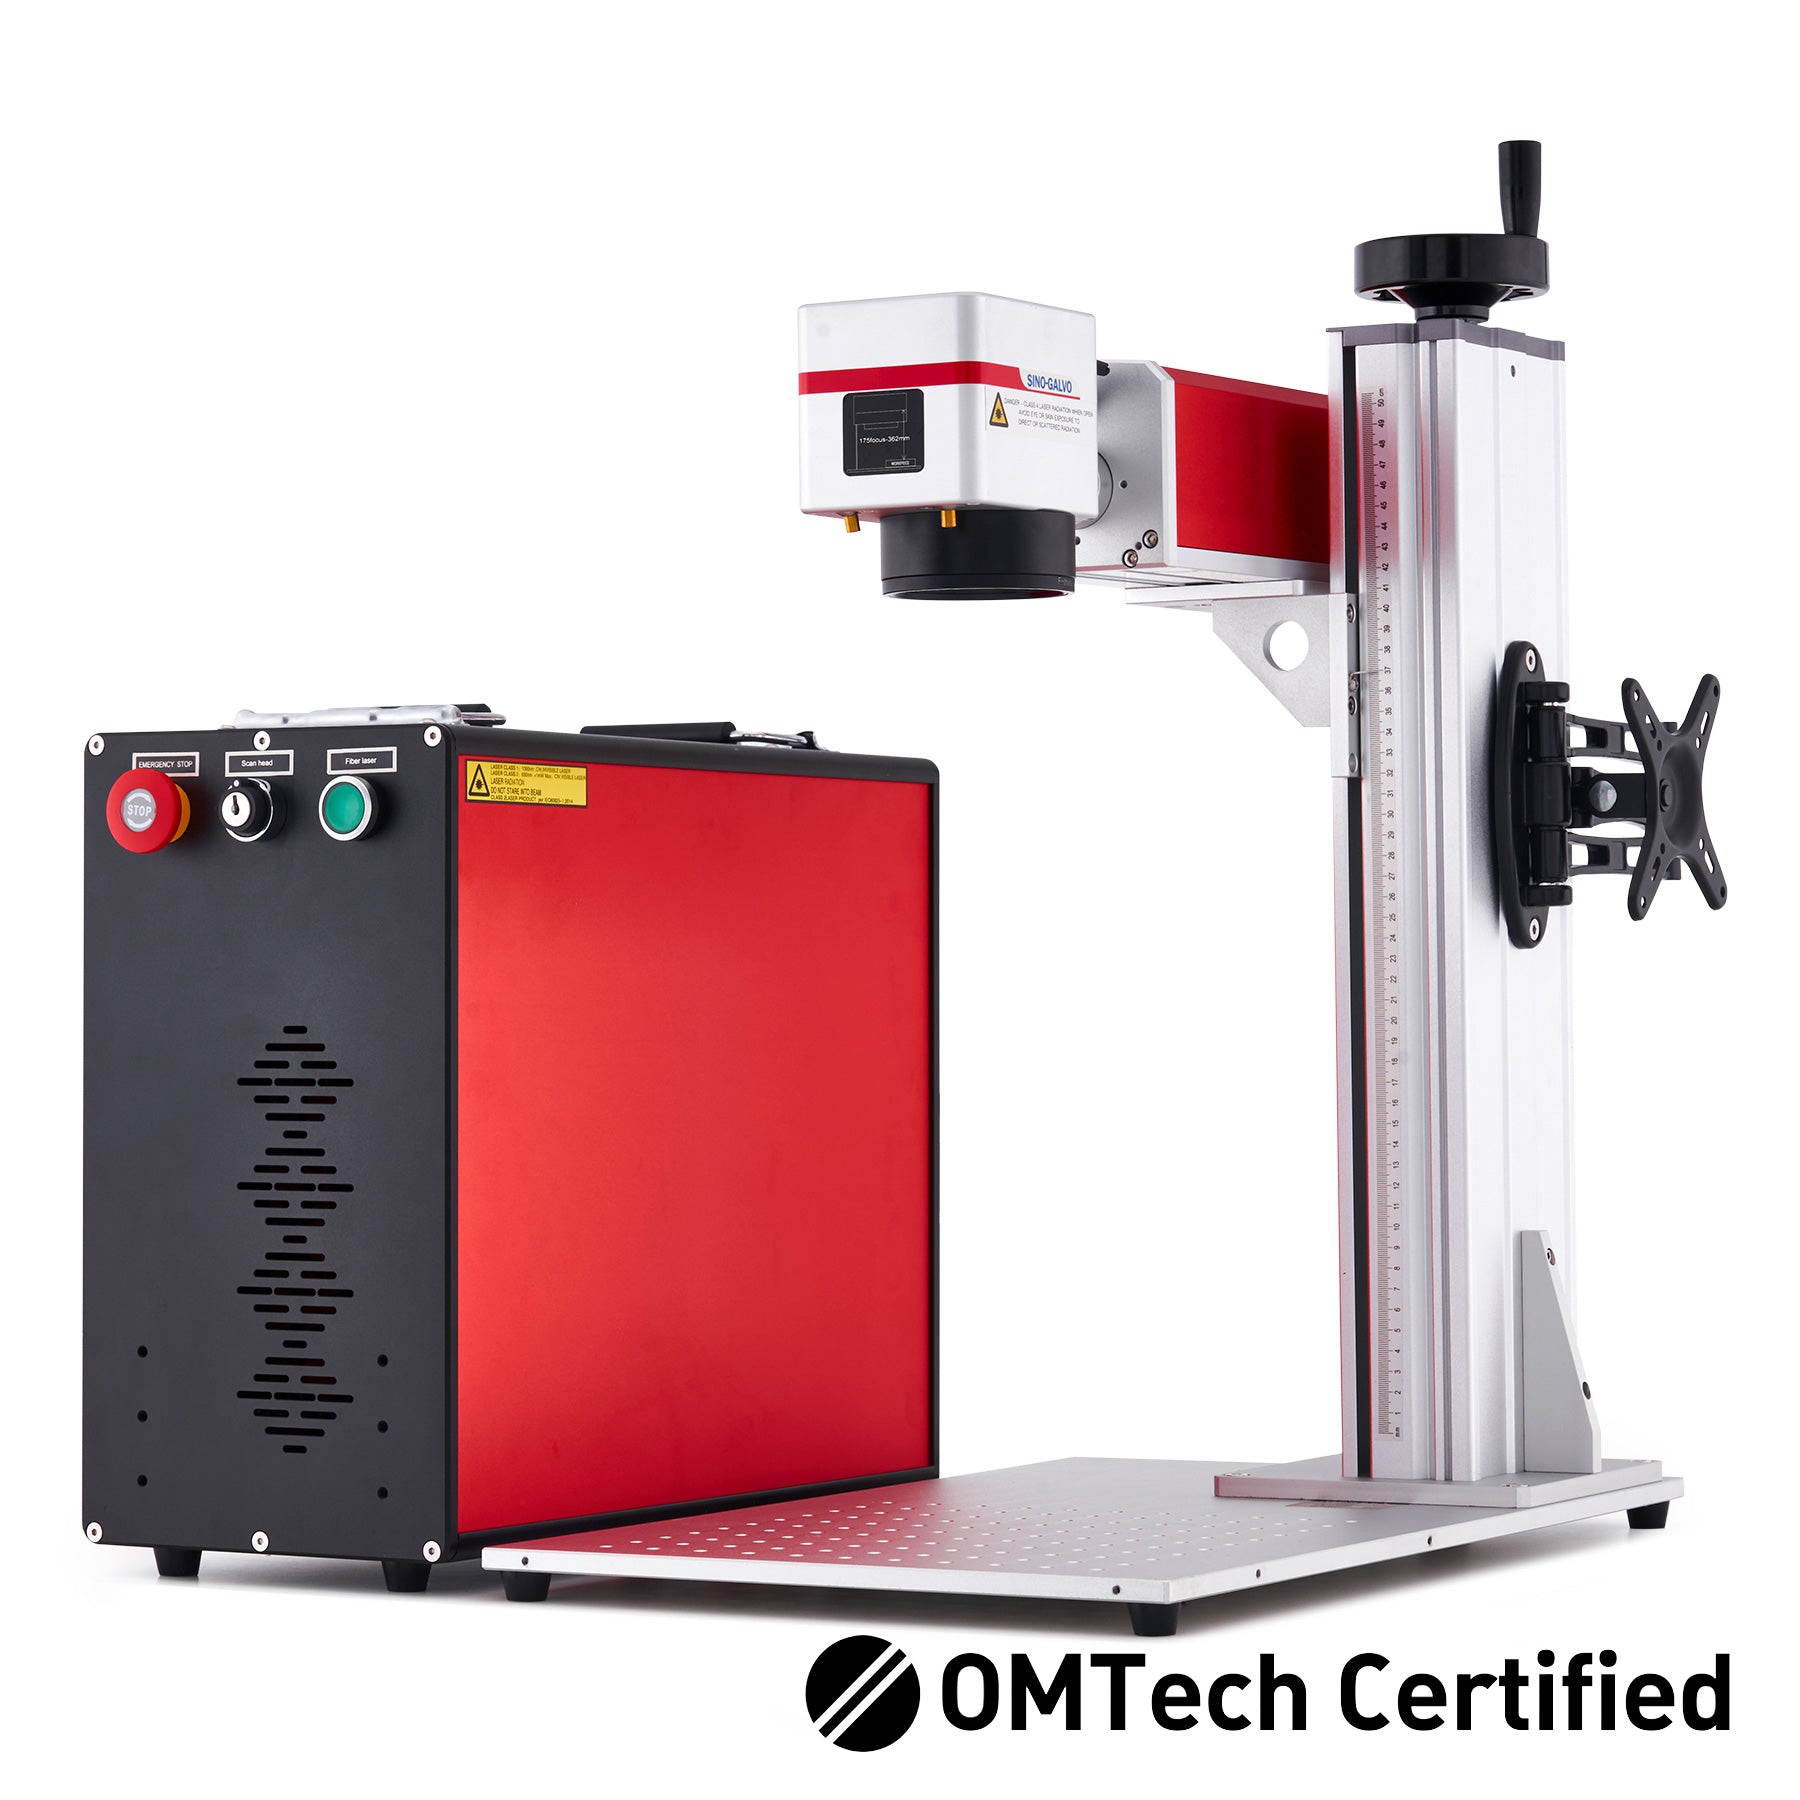 100W MOPA Fiber Laser Engraver Pre-Owned – OMTech Laser